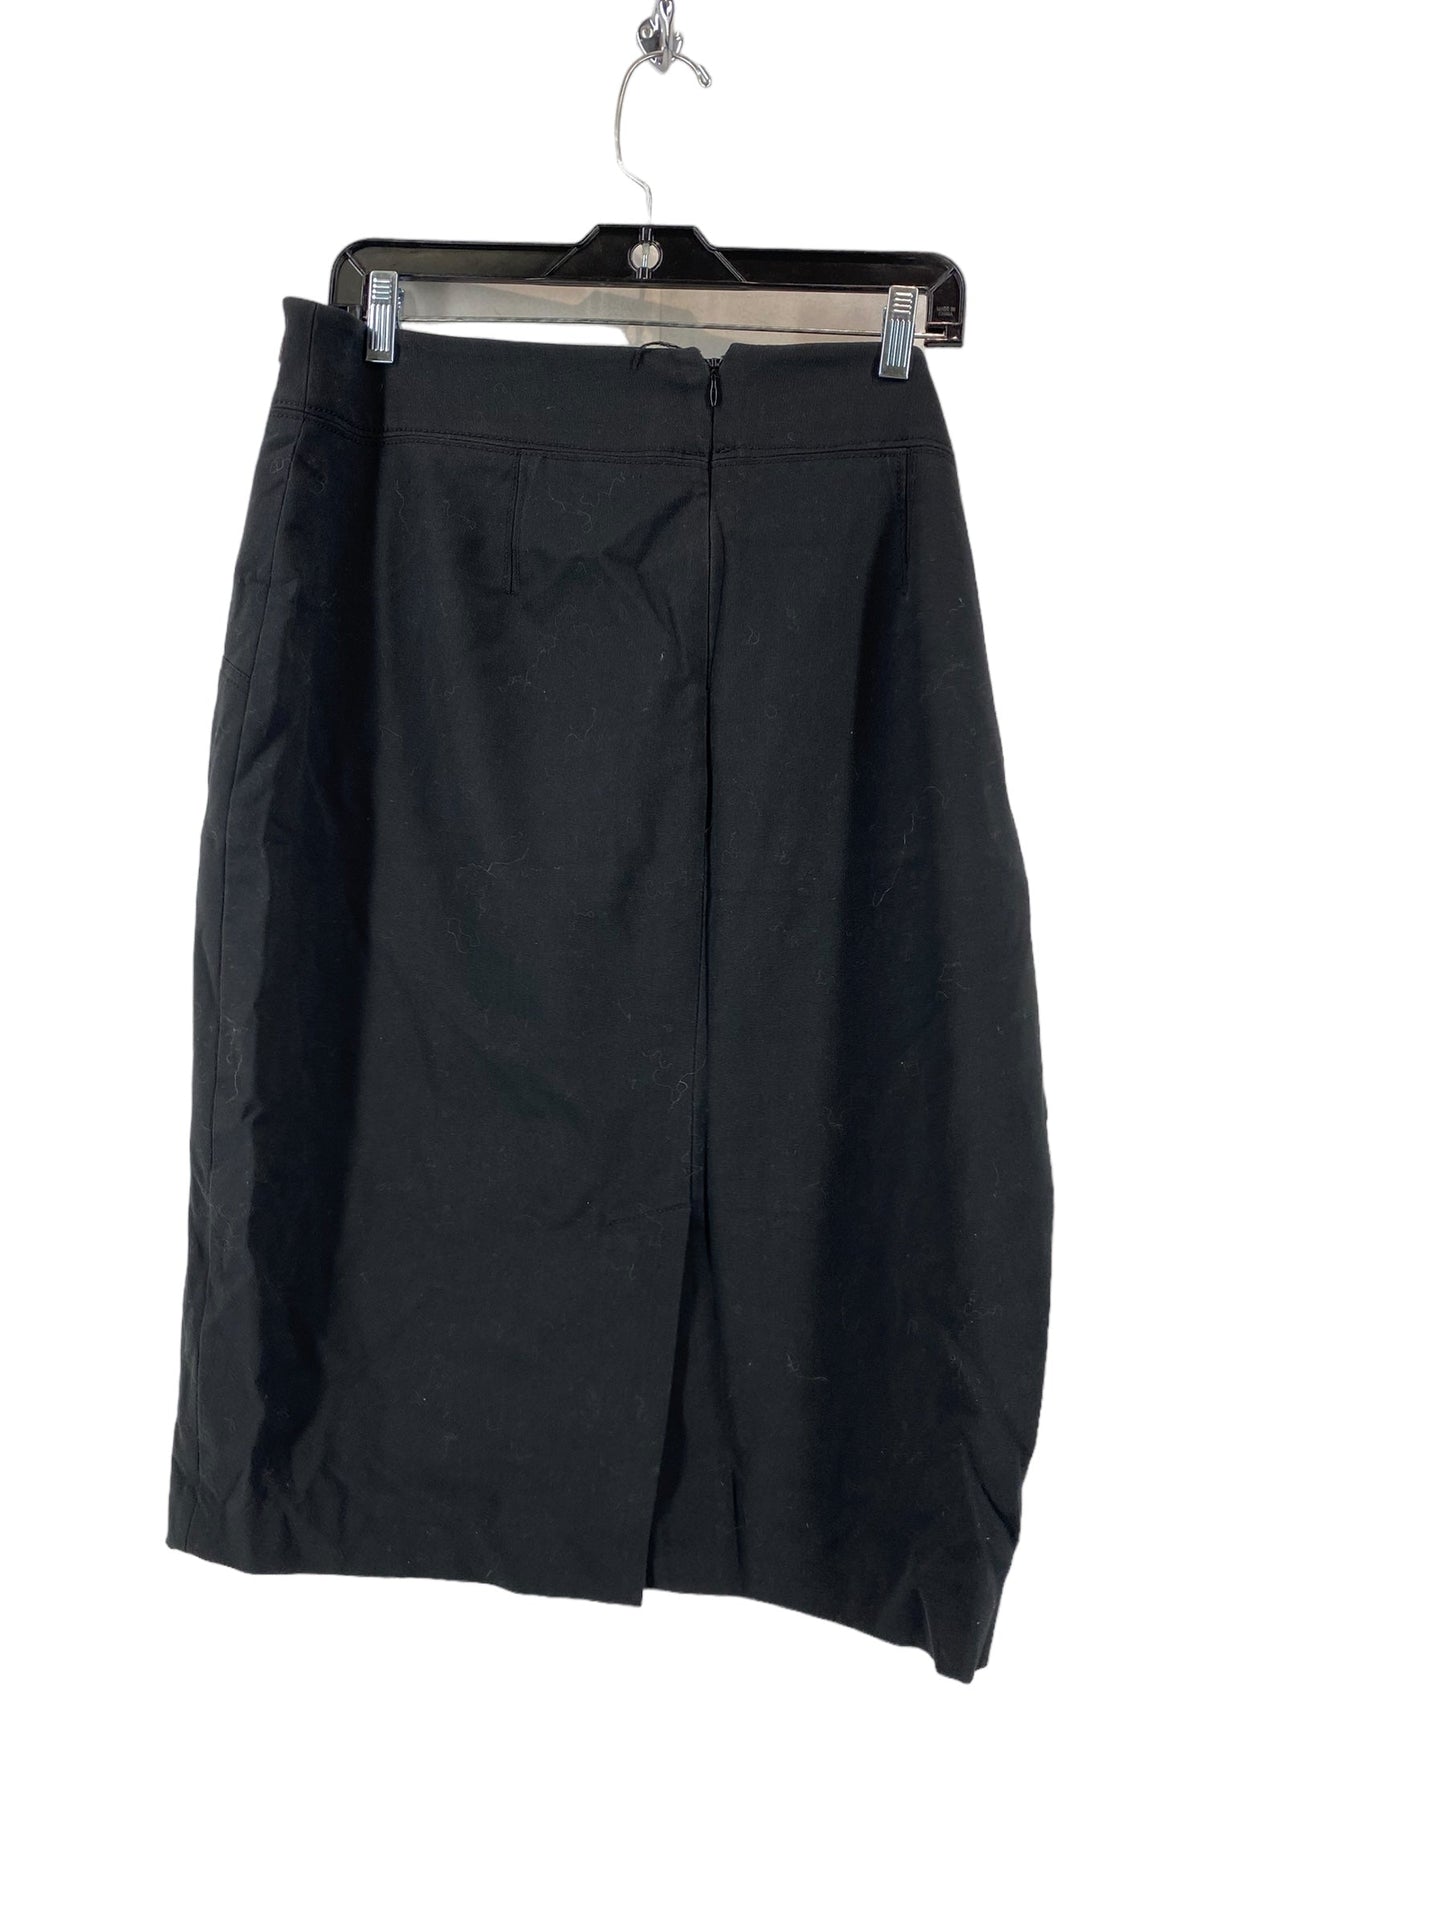 Black Skirt Midi Clothes Mentor, Size 16